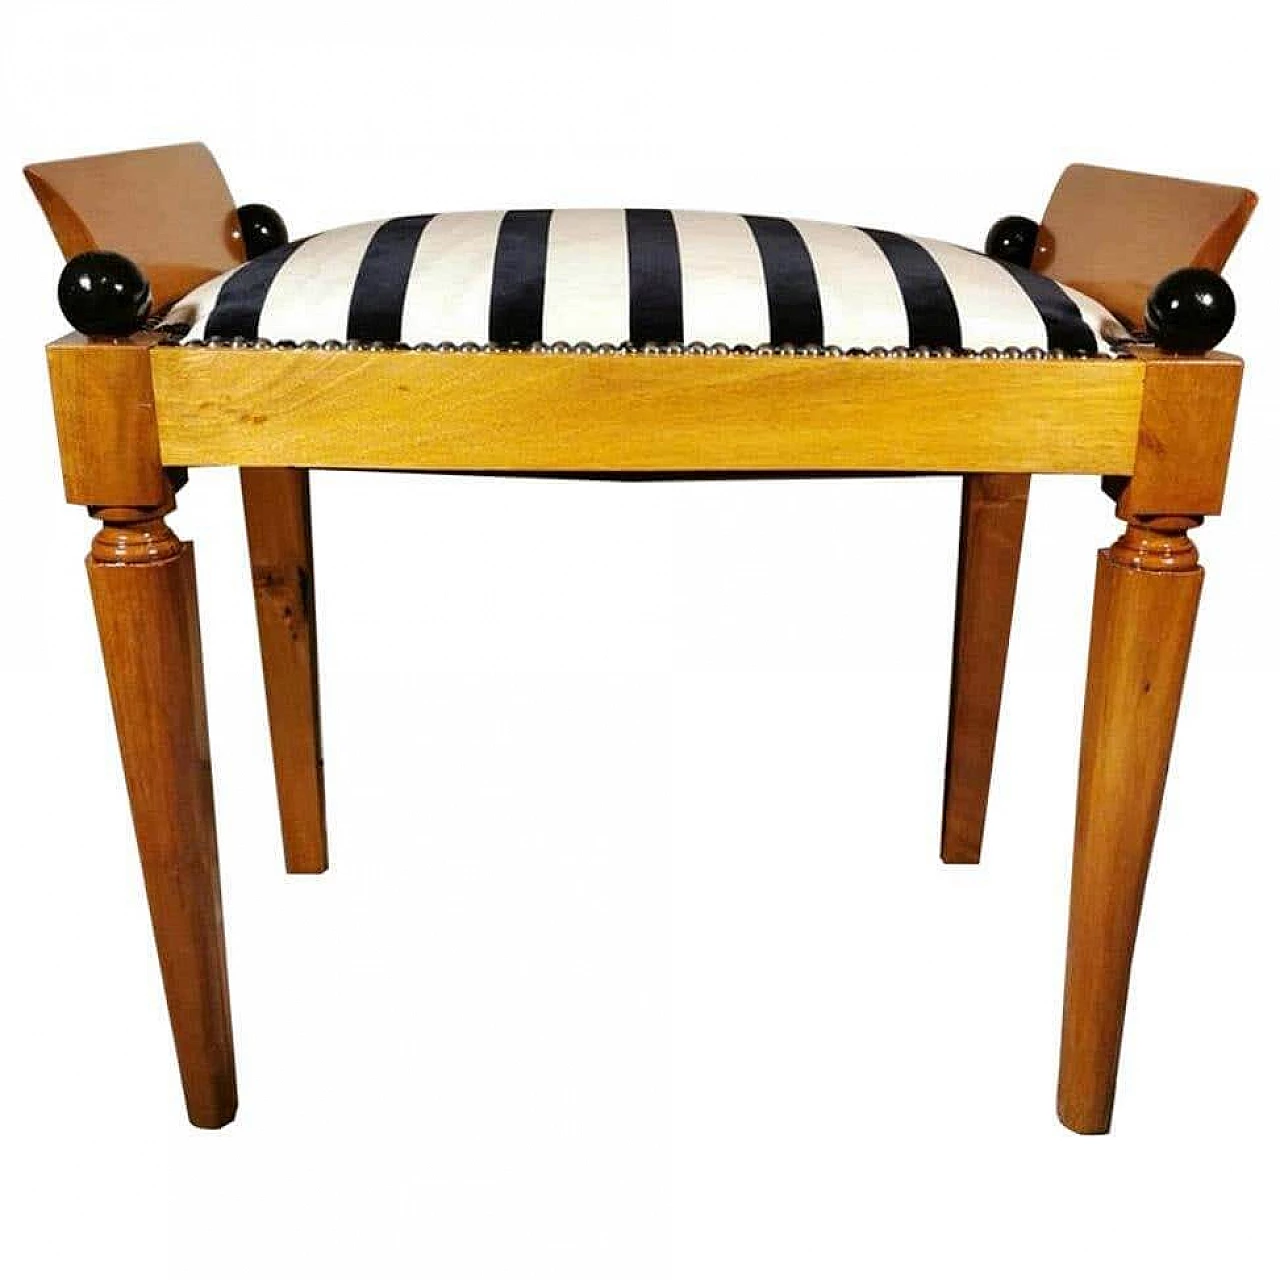 Biedermeier style bench in elmwood and Dedar fabric, 19th century 1226782